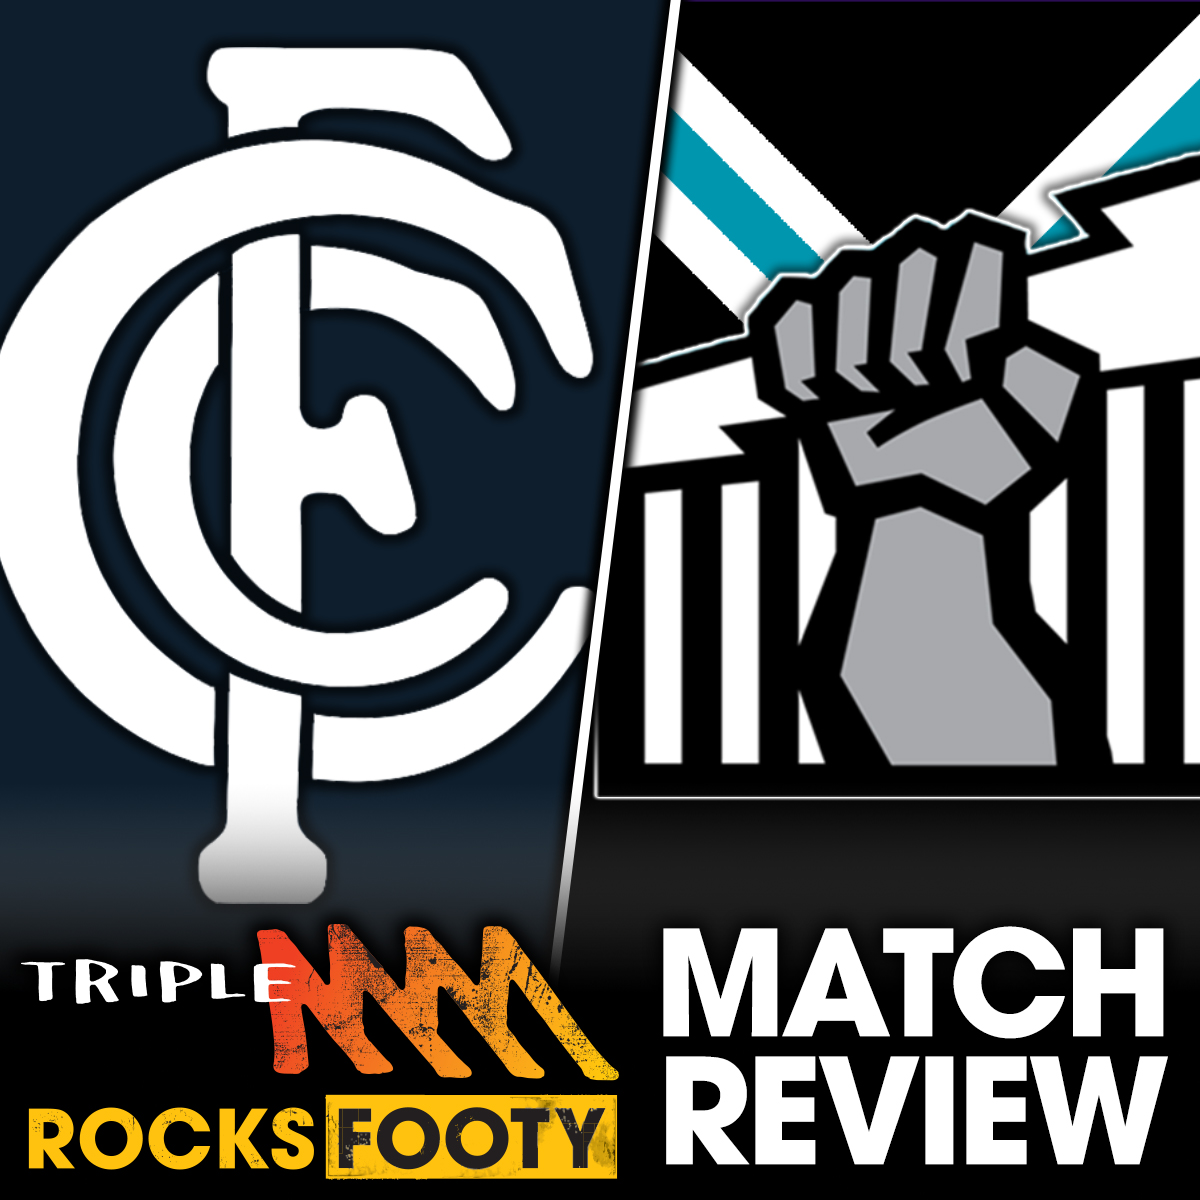 Carlton vs Port Adelaide match review